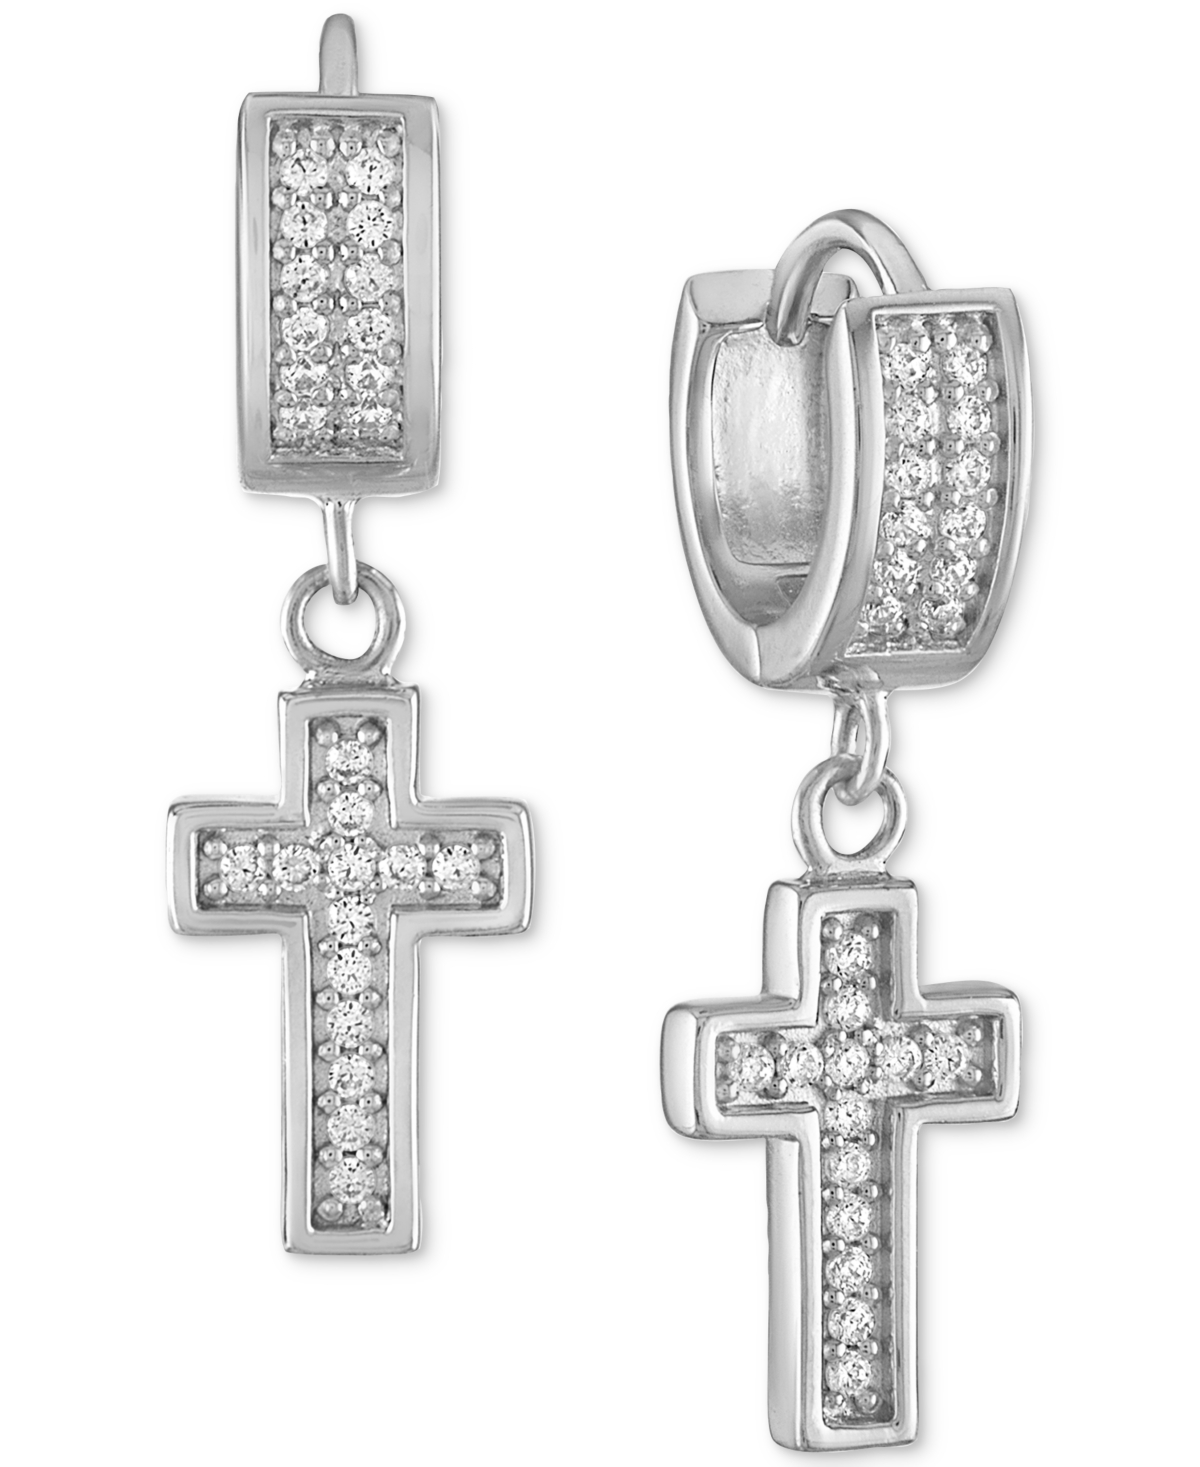 Cubic Zirconia Dangle Cross Huggie Hoop Earrings in Sterling Silver, Created for Macy's - Silver